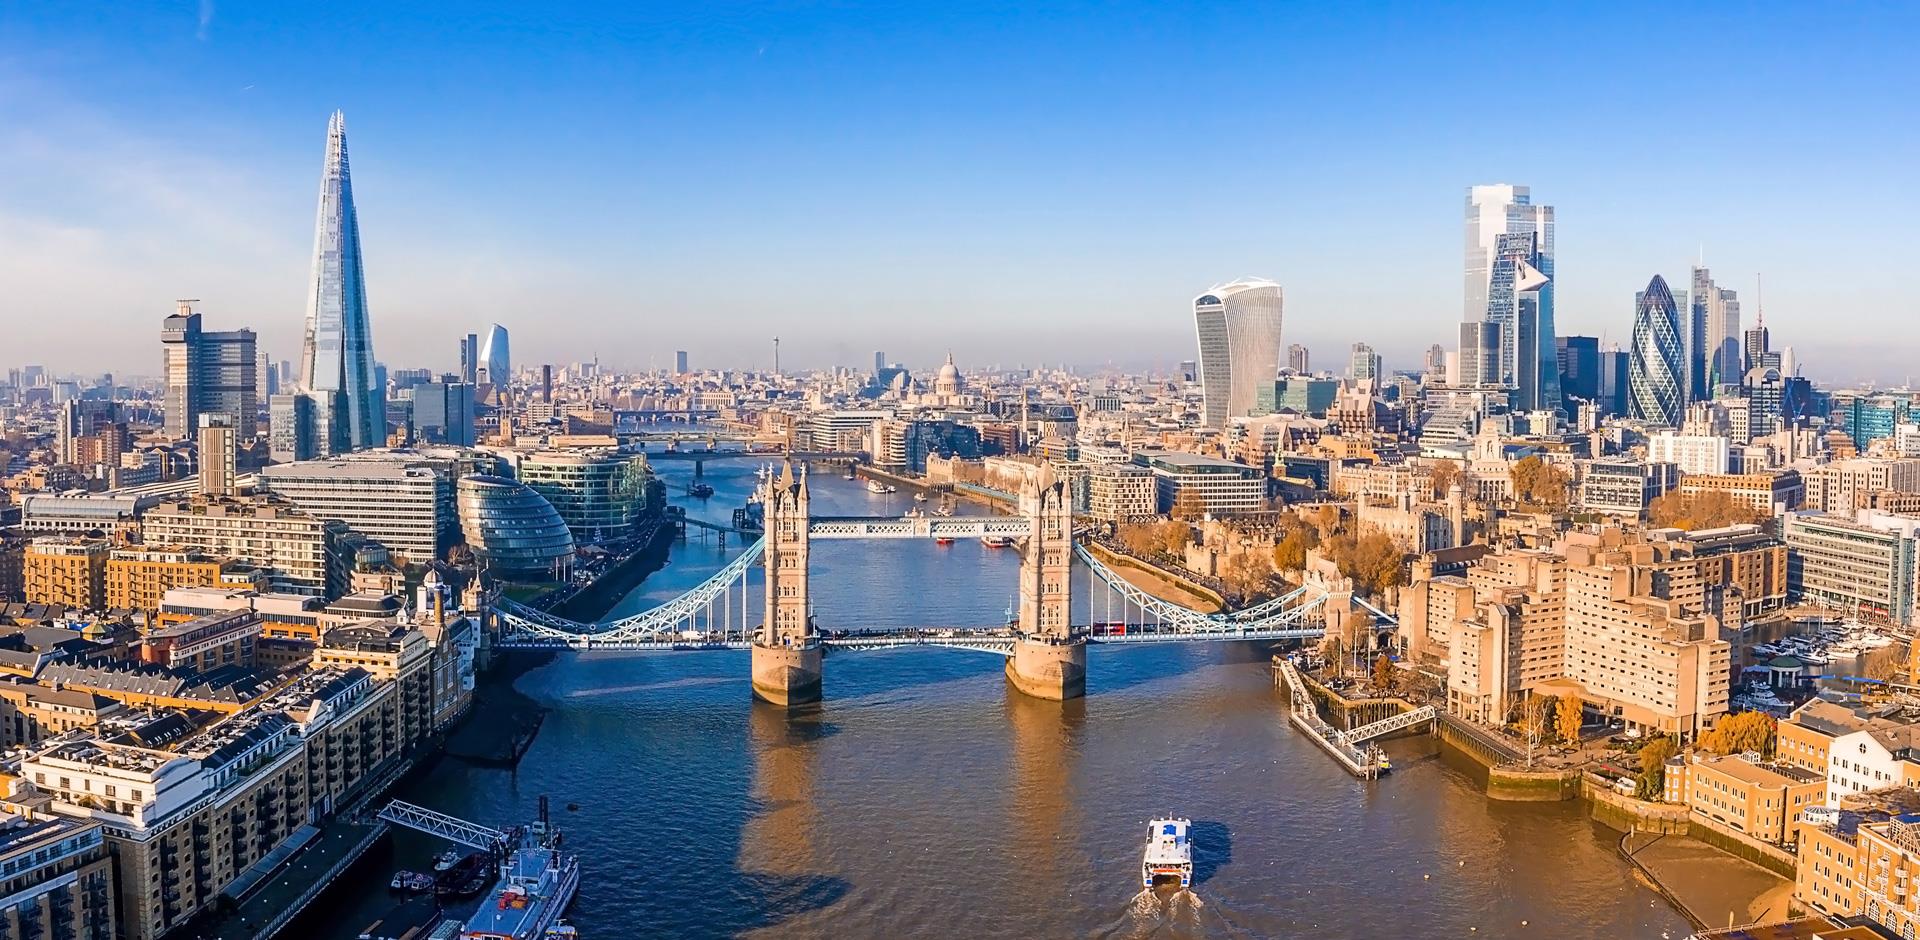 Aerial view of the Tower Bridge in London, UK.